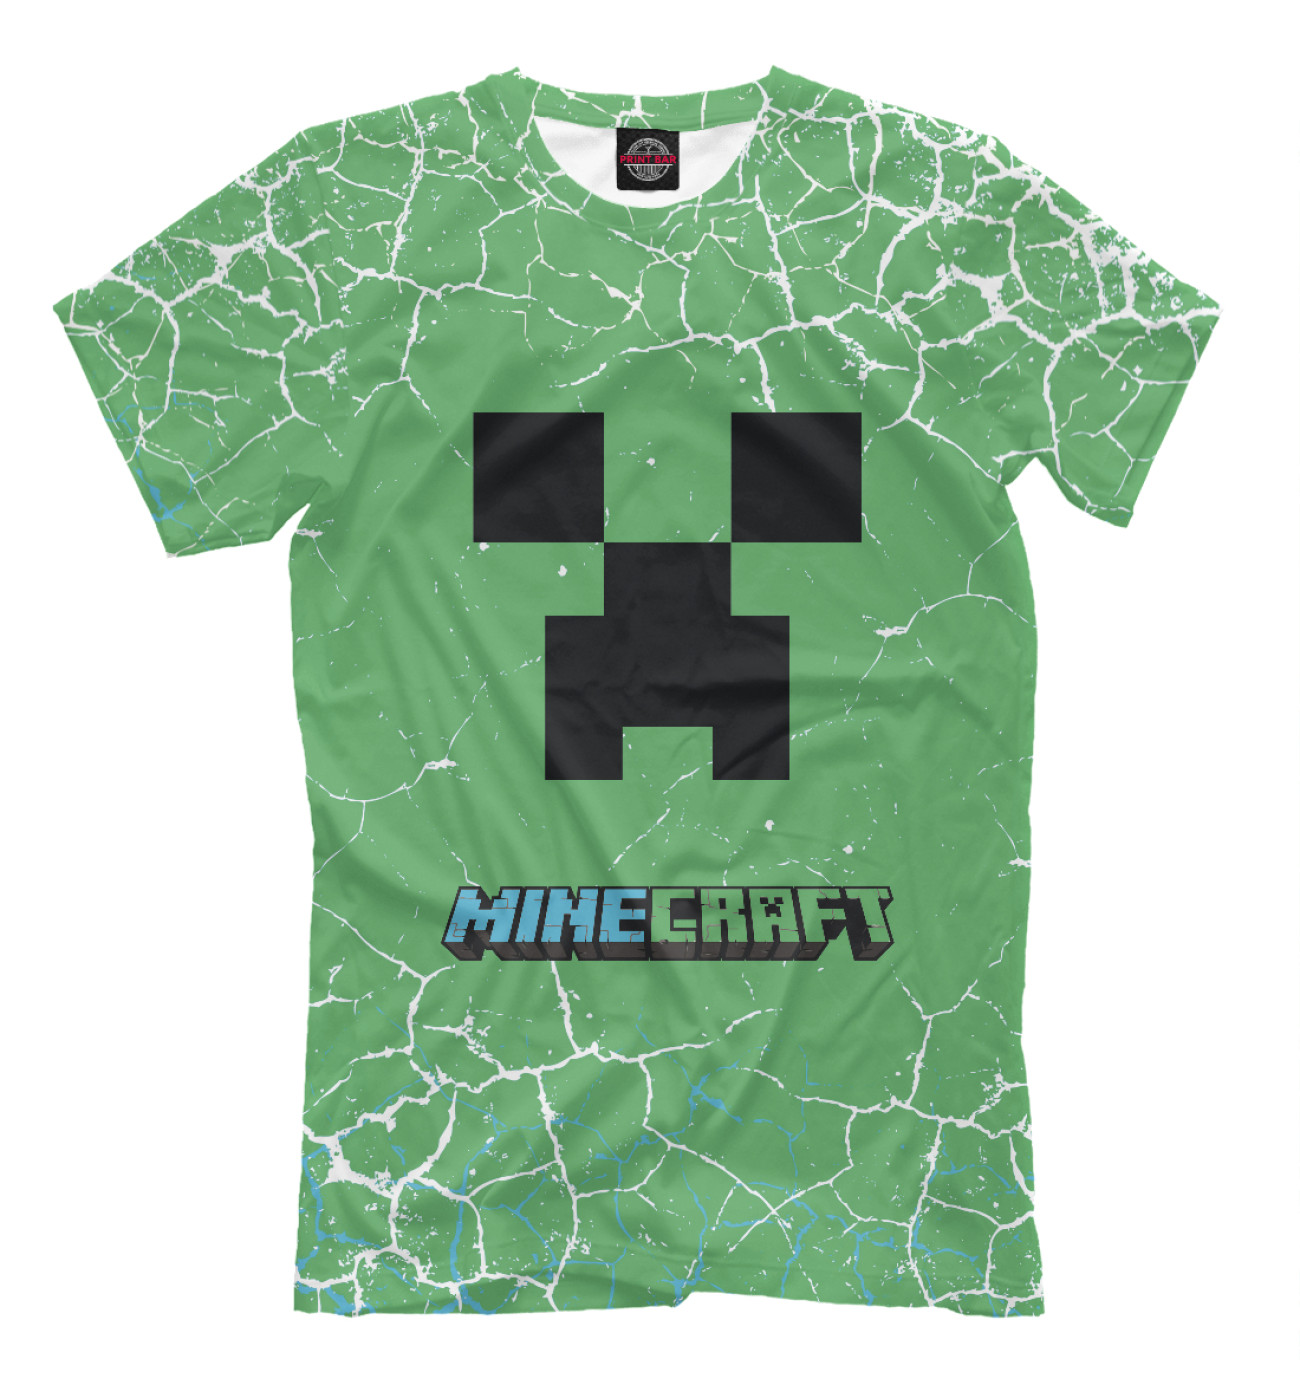 Мужская Футболка Minecraft, артикул: MCR-612968-fut-2